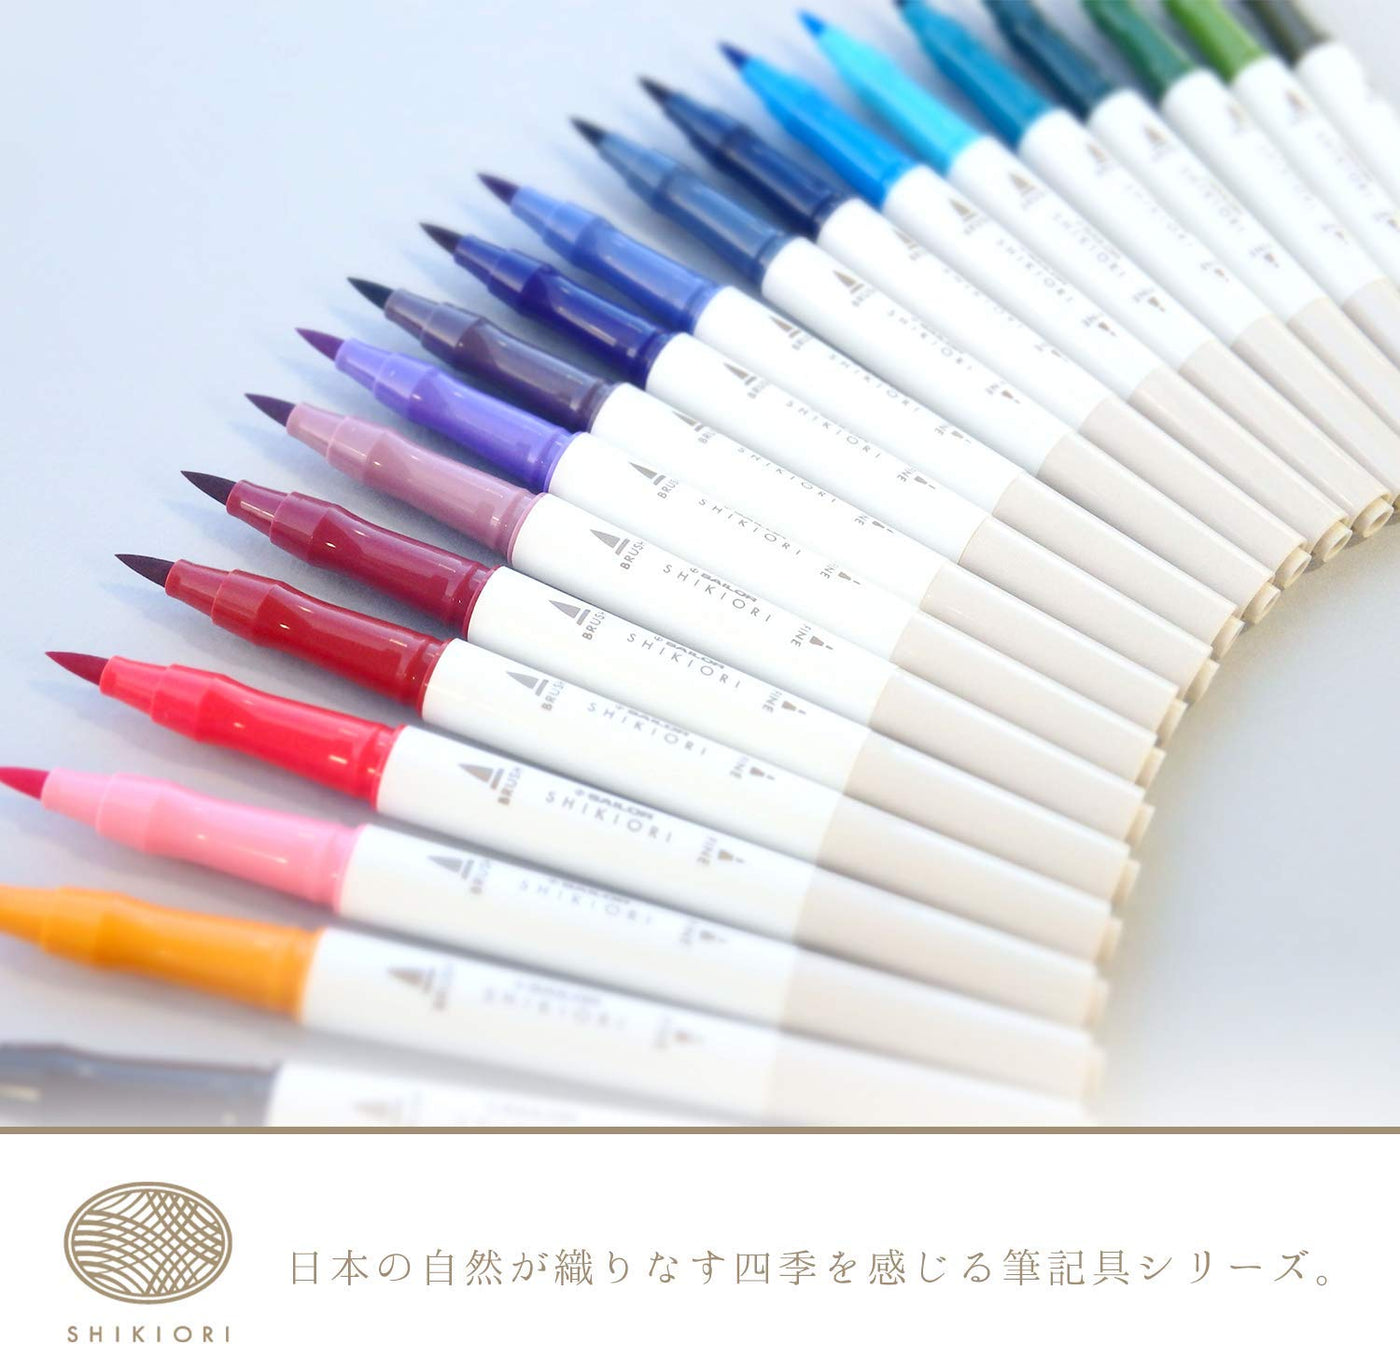 Sailor Shikiori Marker, 20 Colors Set (25-5400-000)